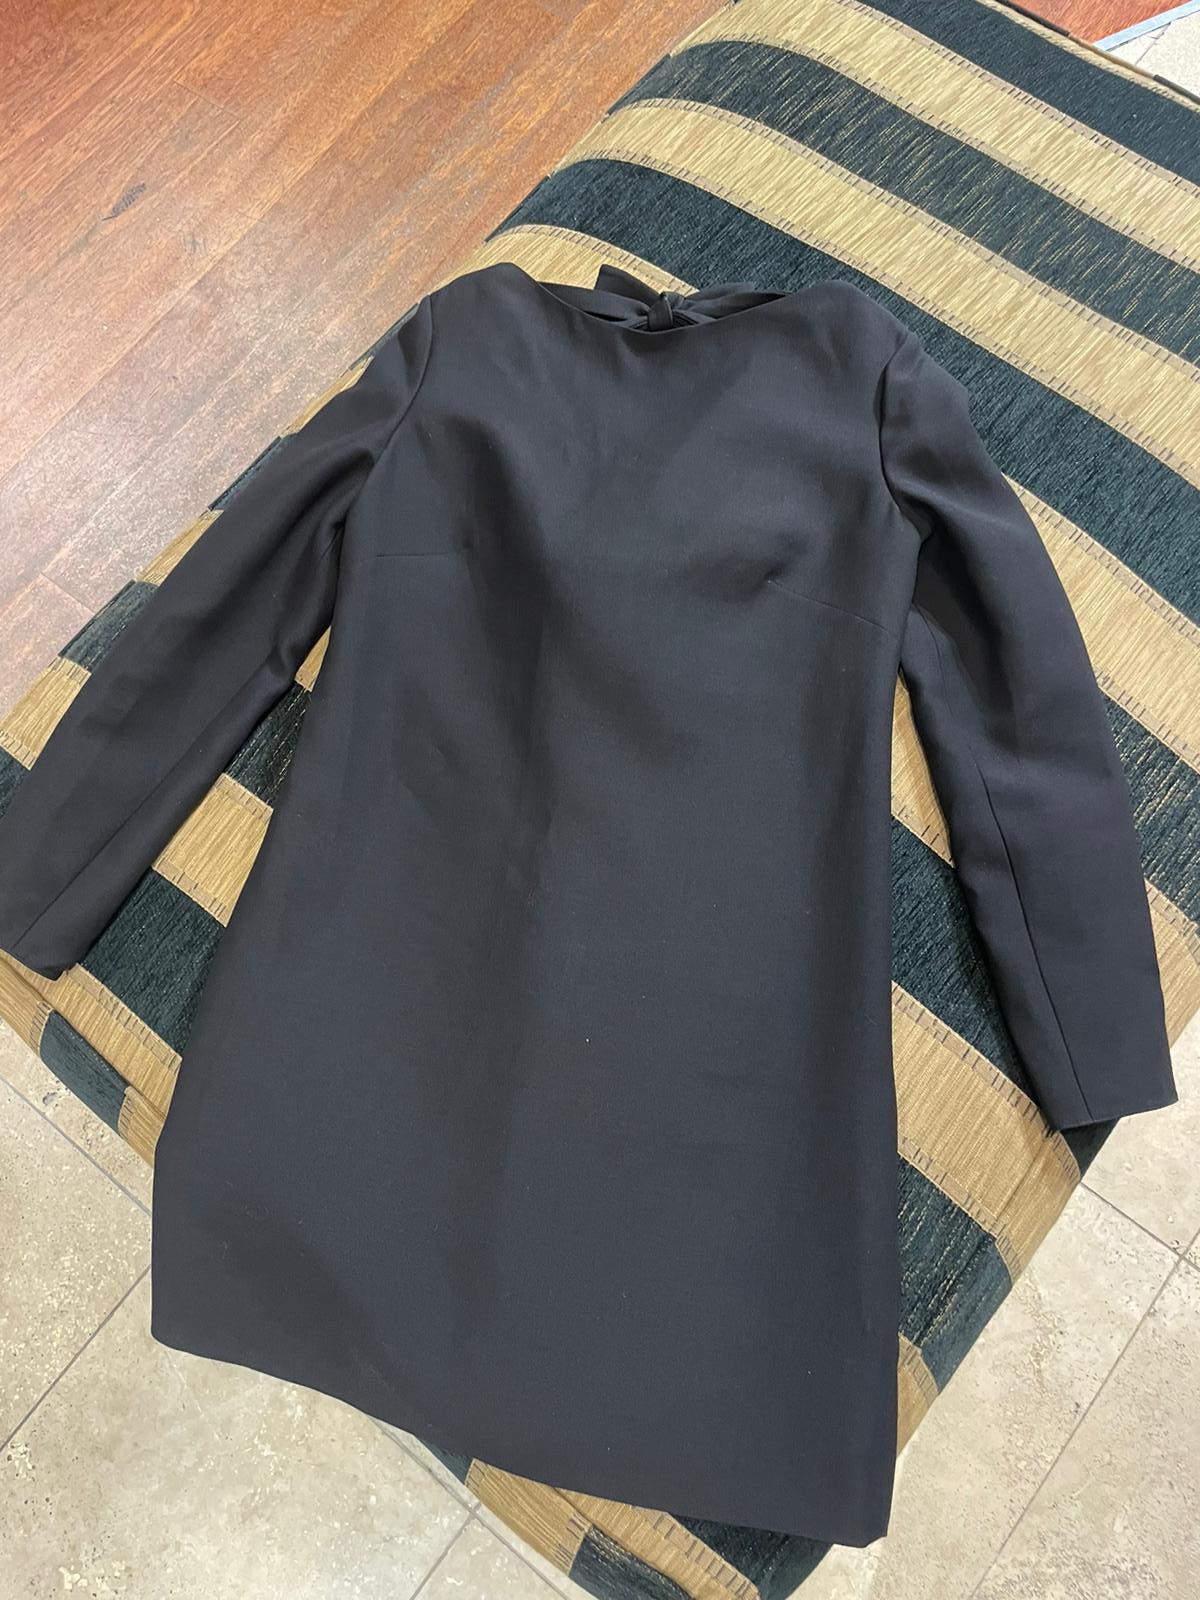 Valentino little black dress size 6-10